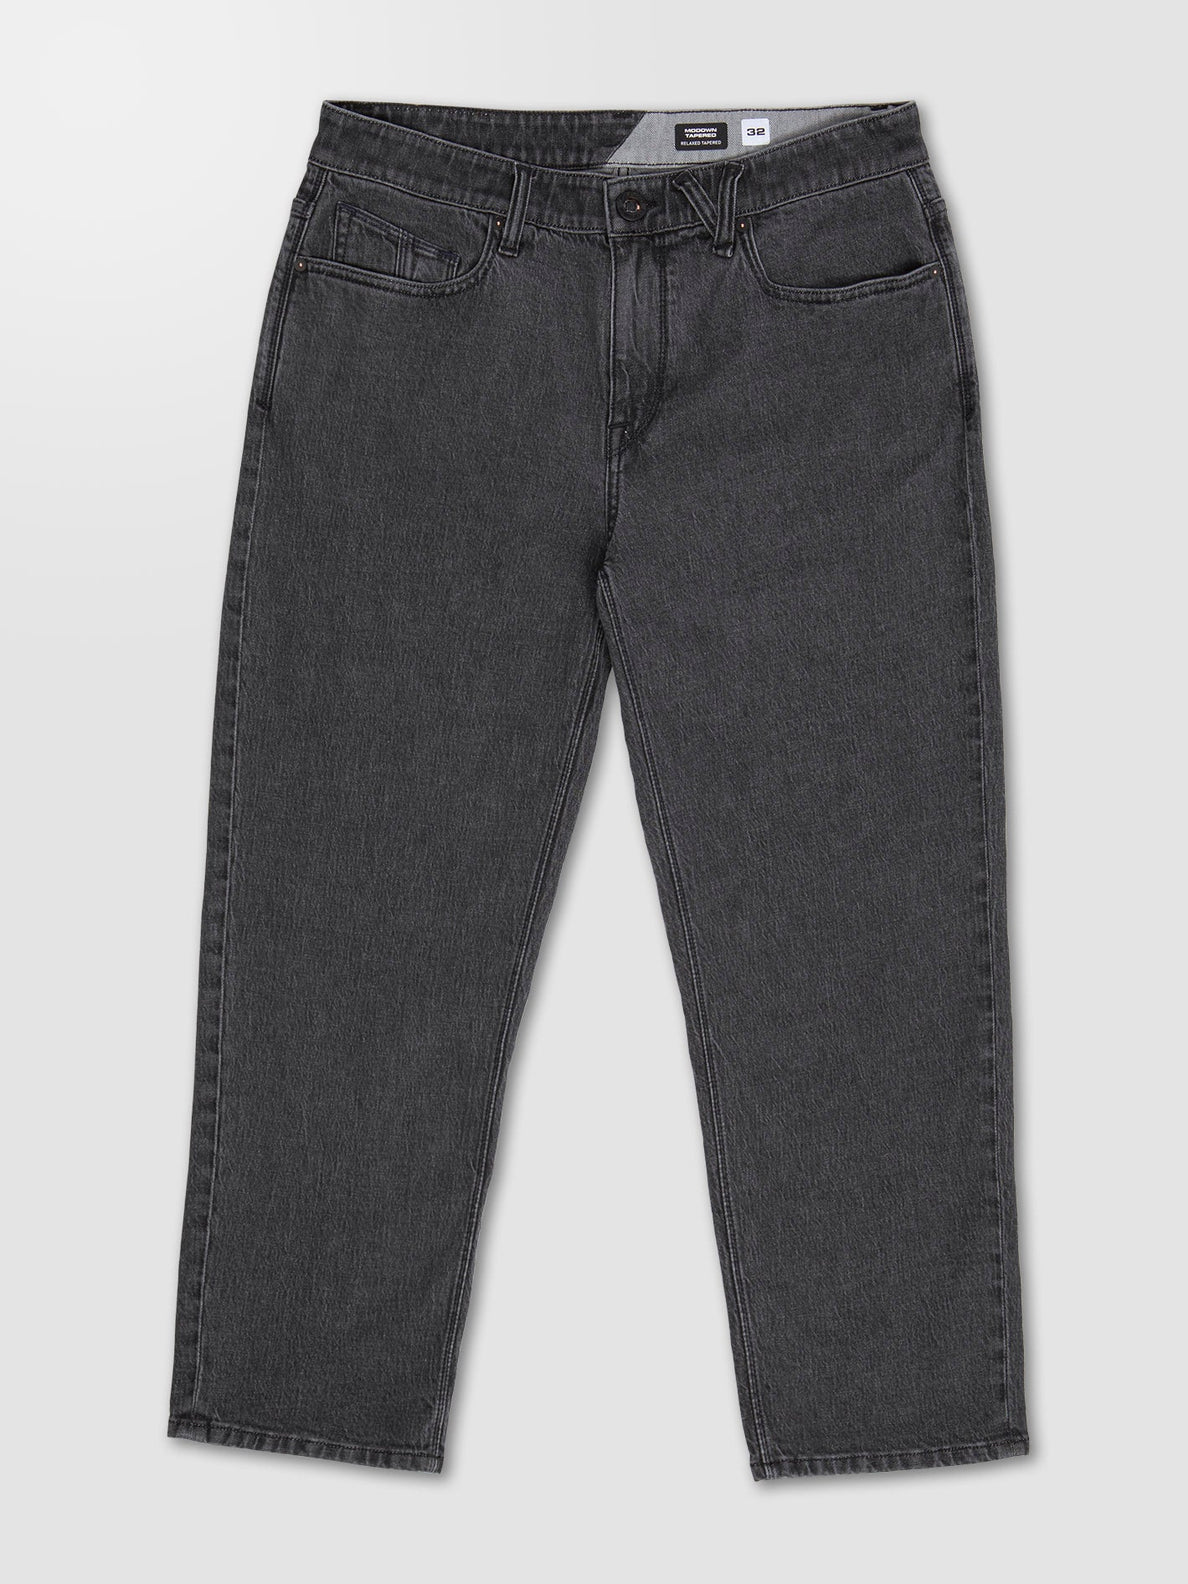 Modown Tapered Jeans - STONEY BLACK (A1932102_STY) [8]